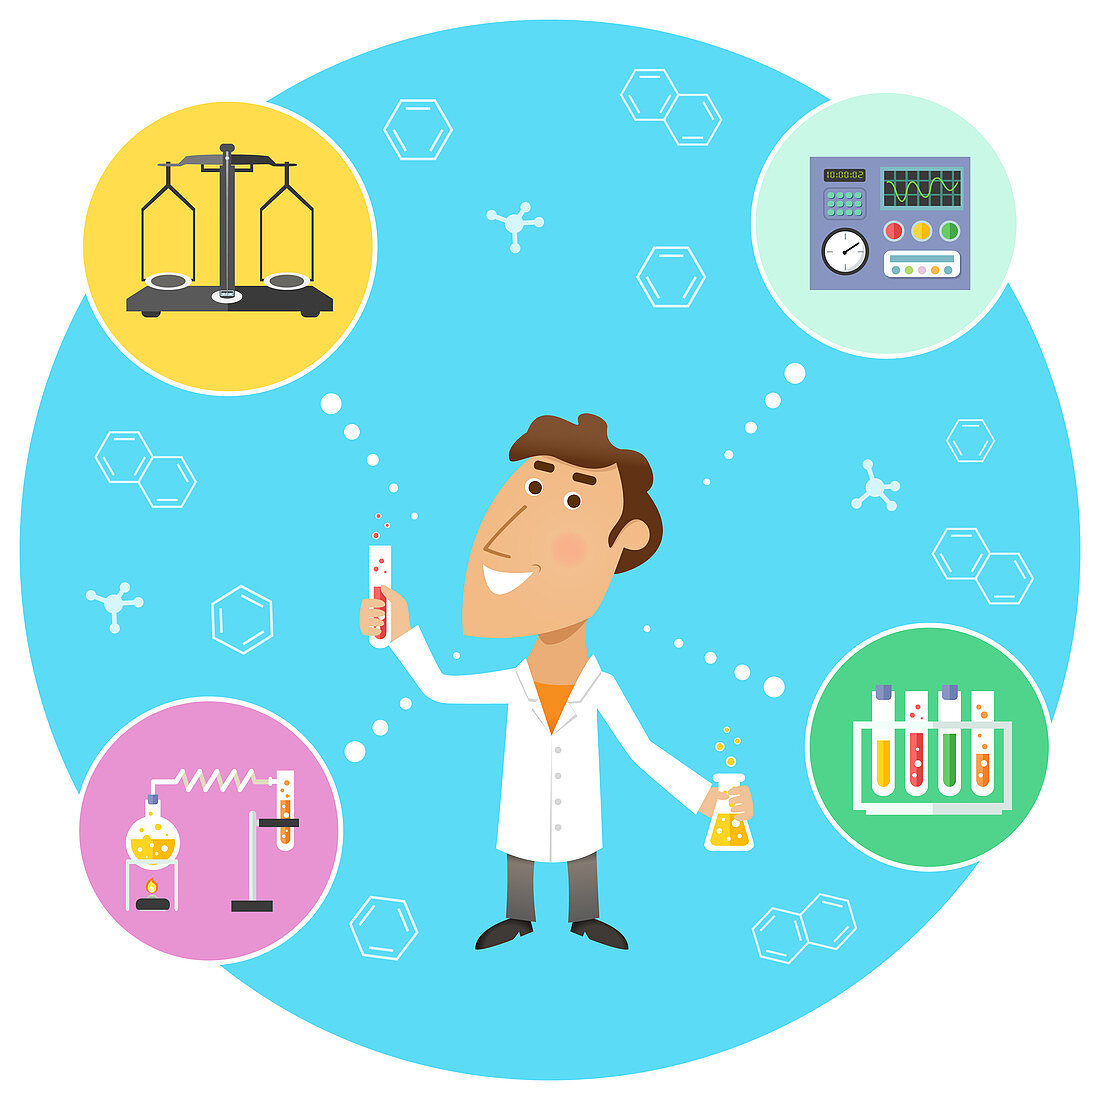 Laboratory research, illustration